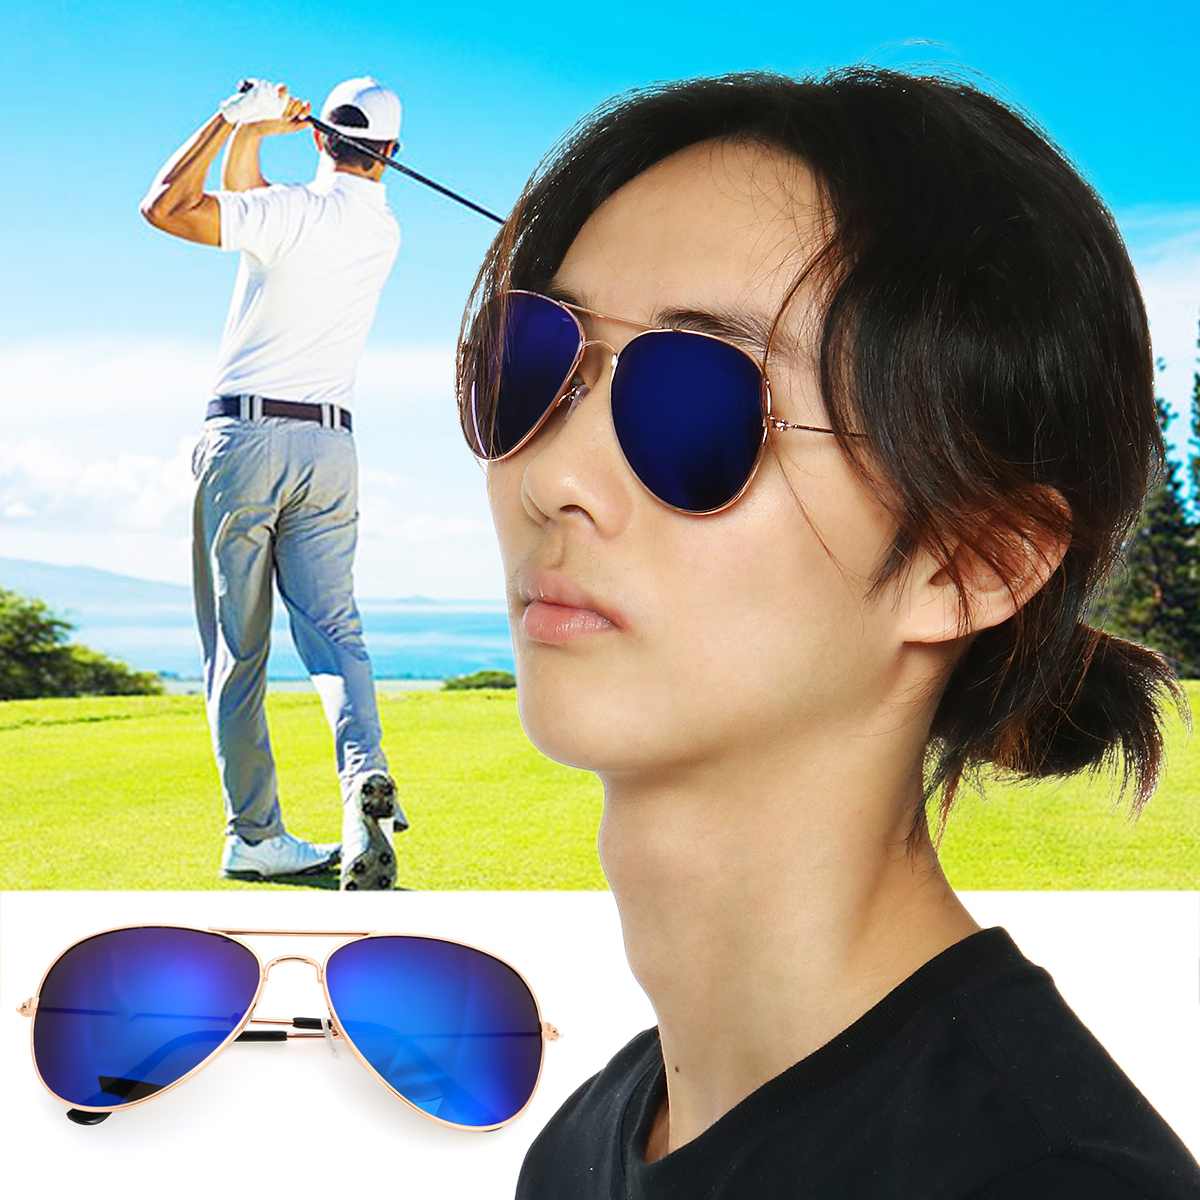 Golf Vinden Bril Golfbal Finder Professionele Lenzen Bril Sport Zonnebril Fit Voor Hardlopen Golf Rijden